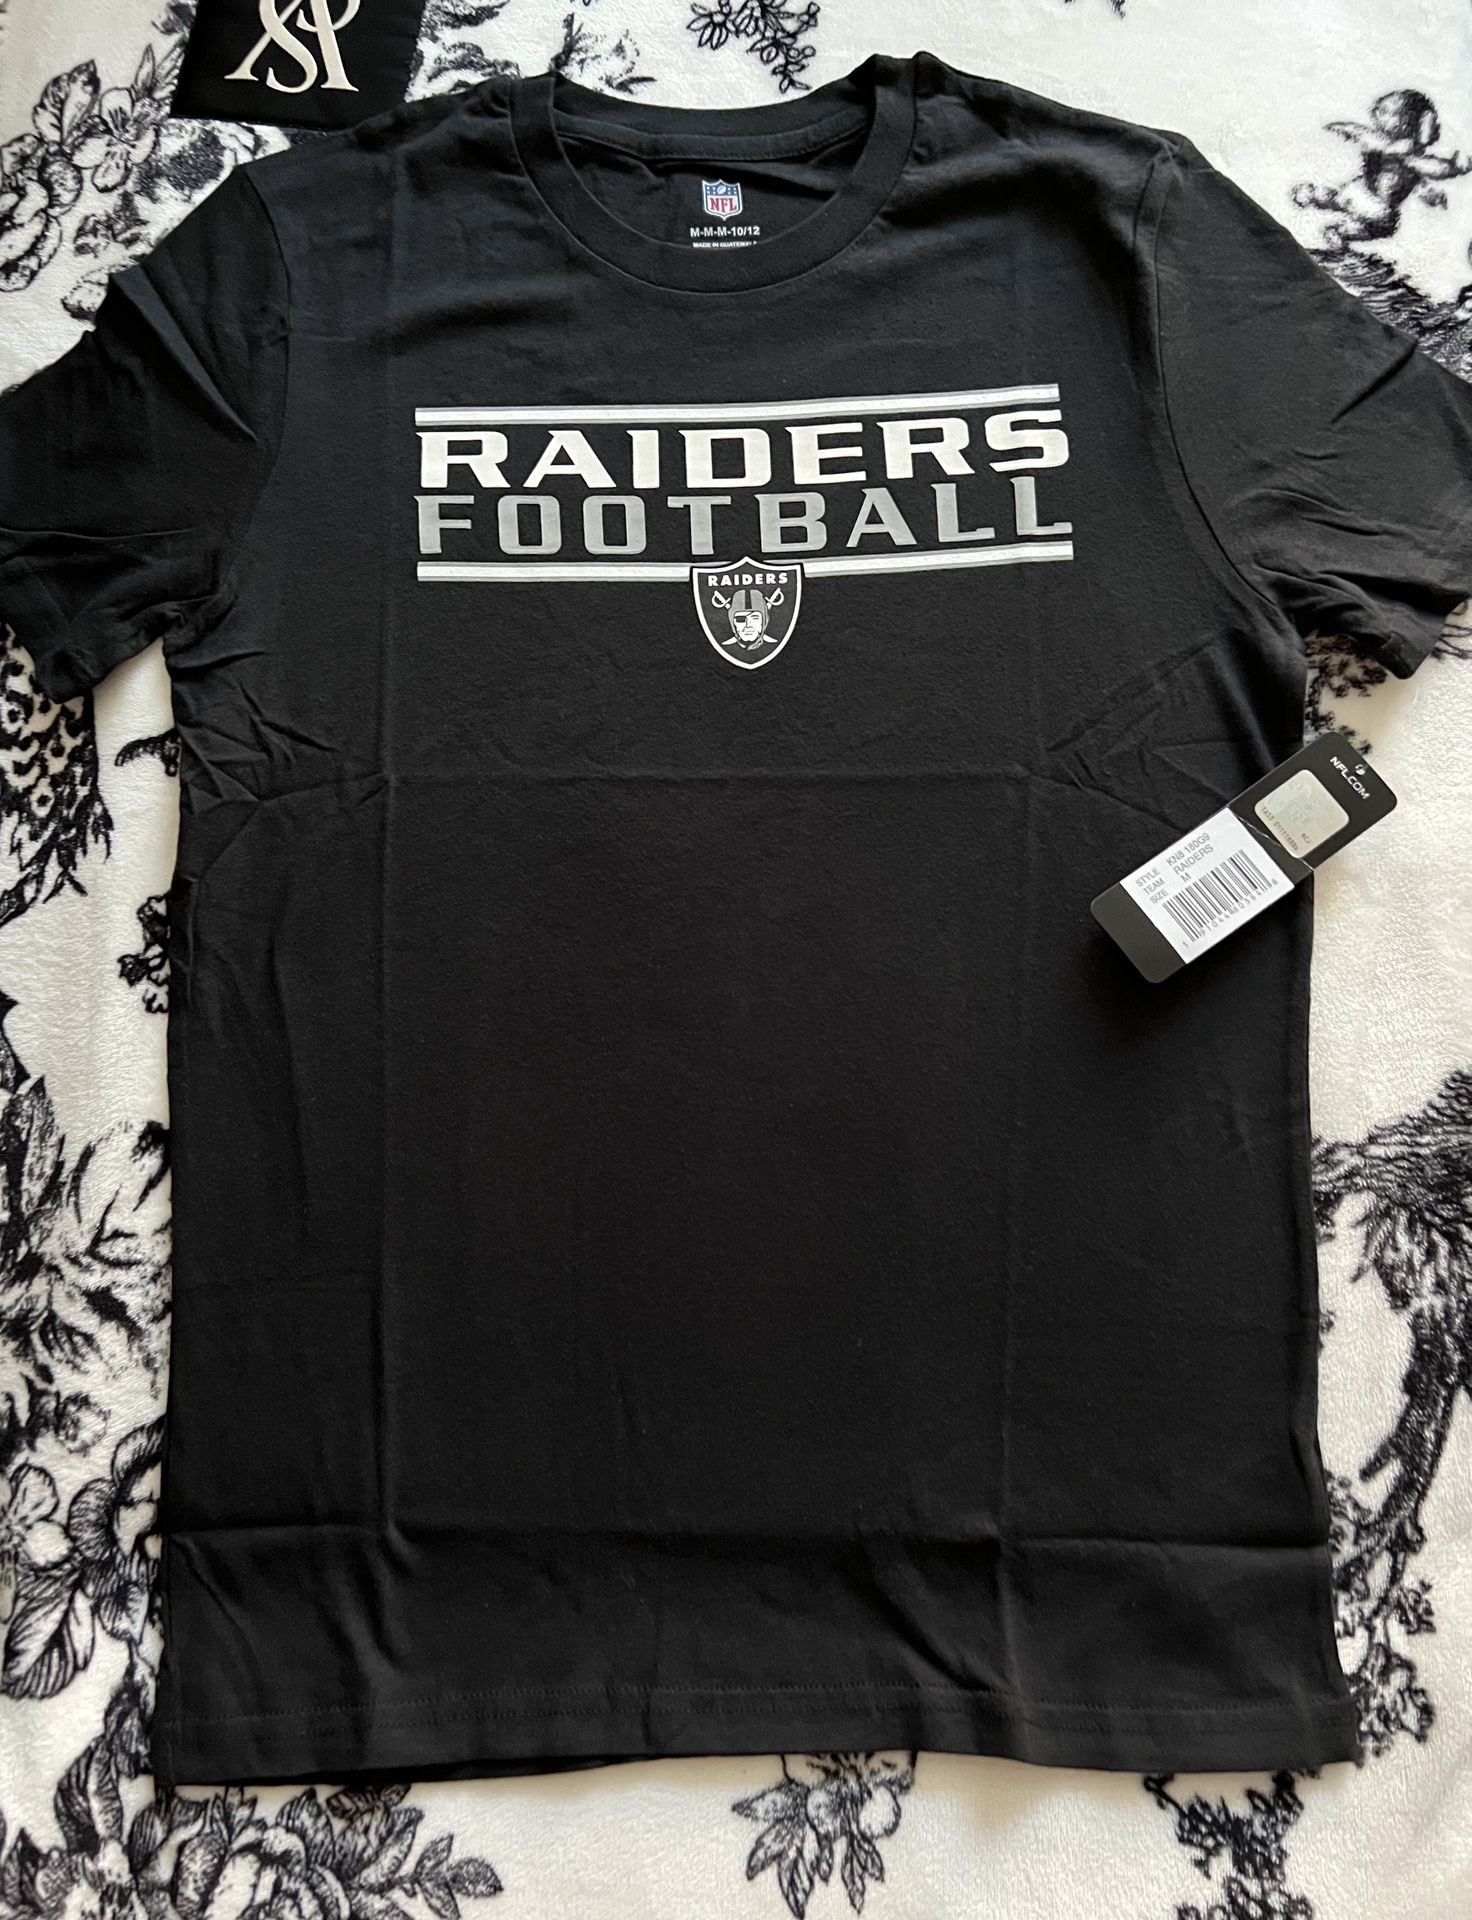 Raiders Football boys tee shirt, size M